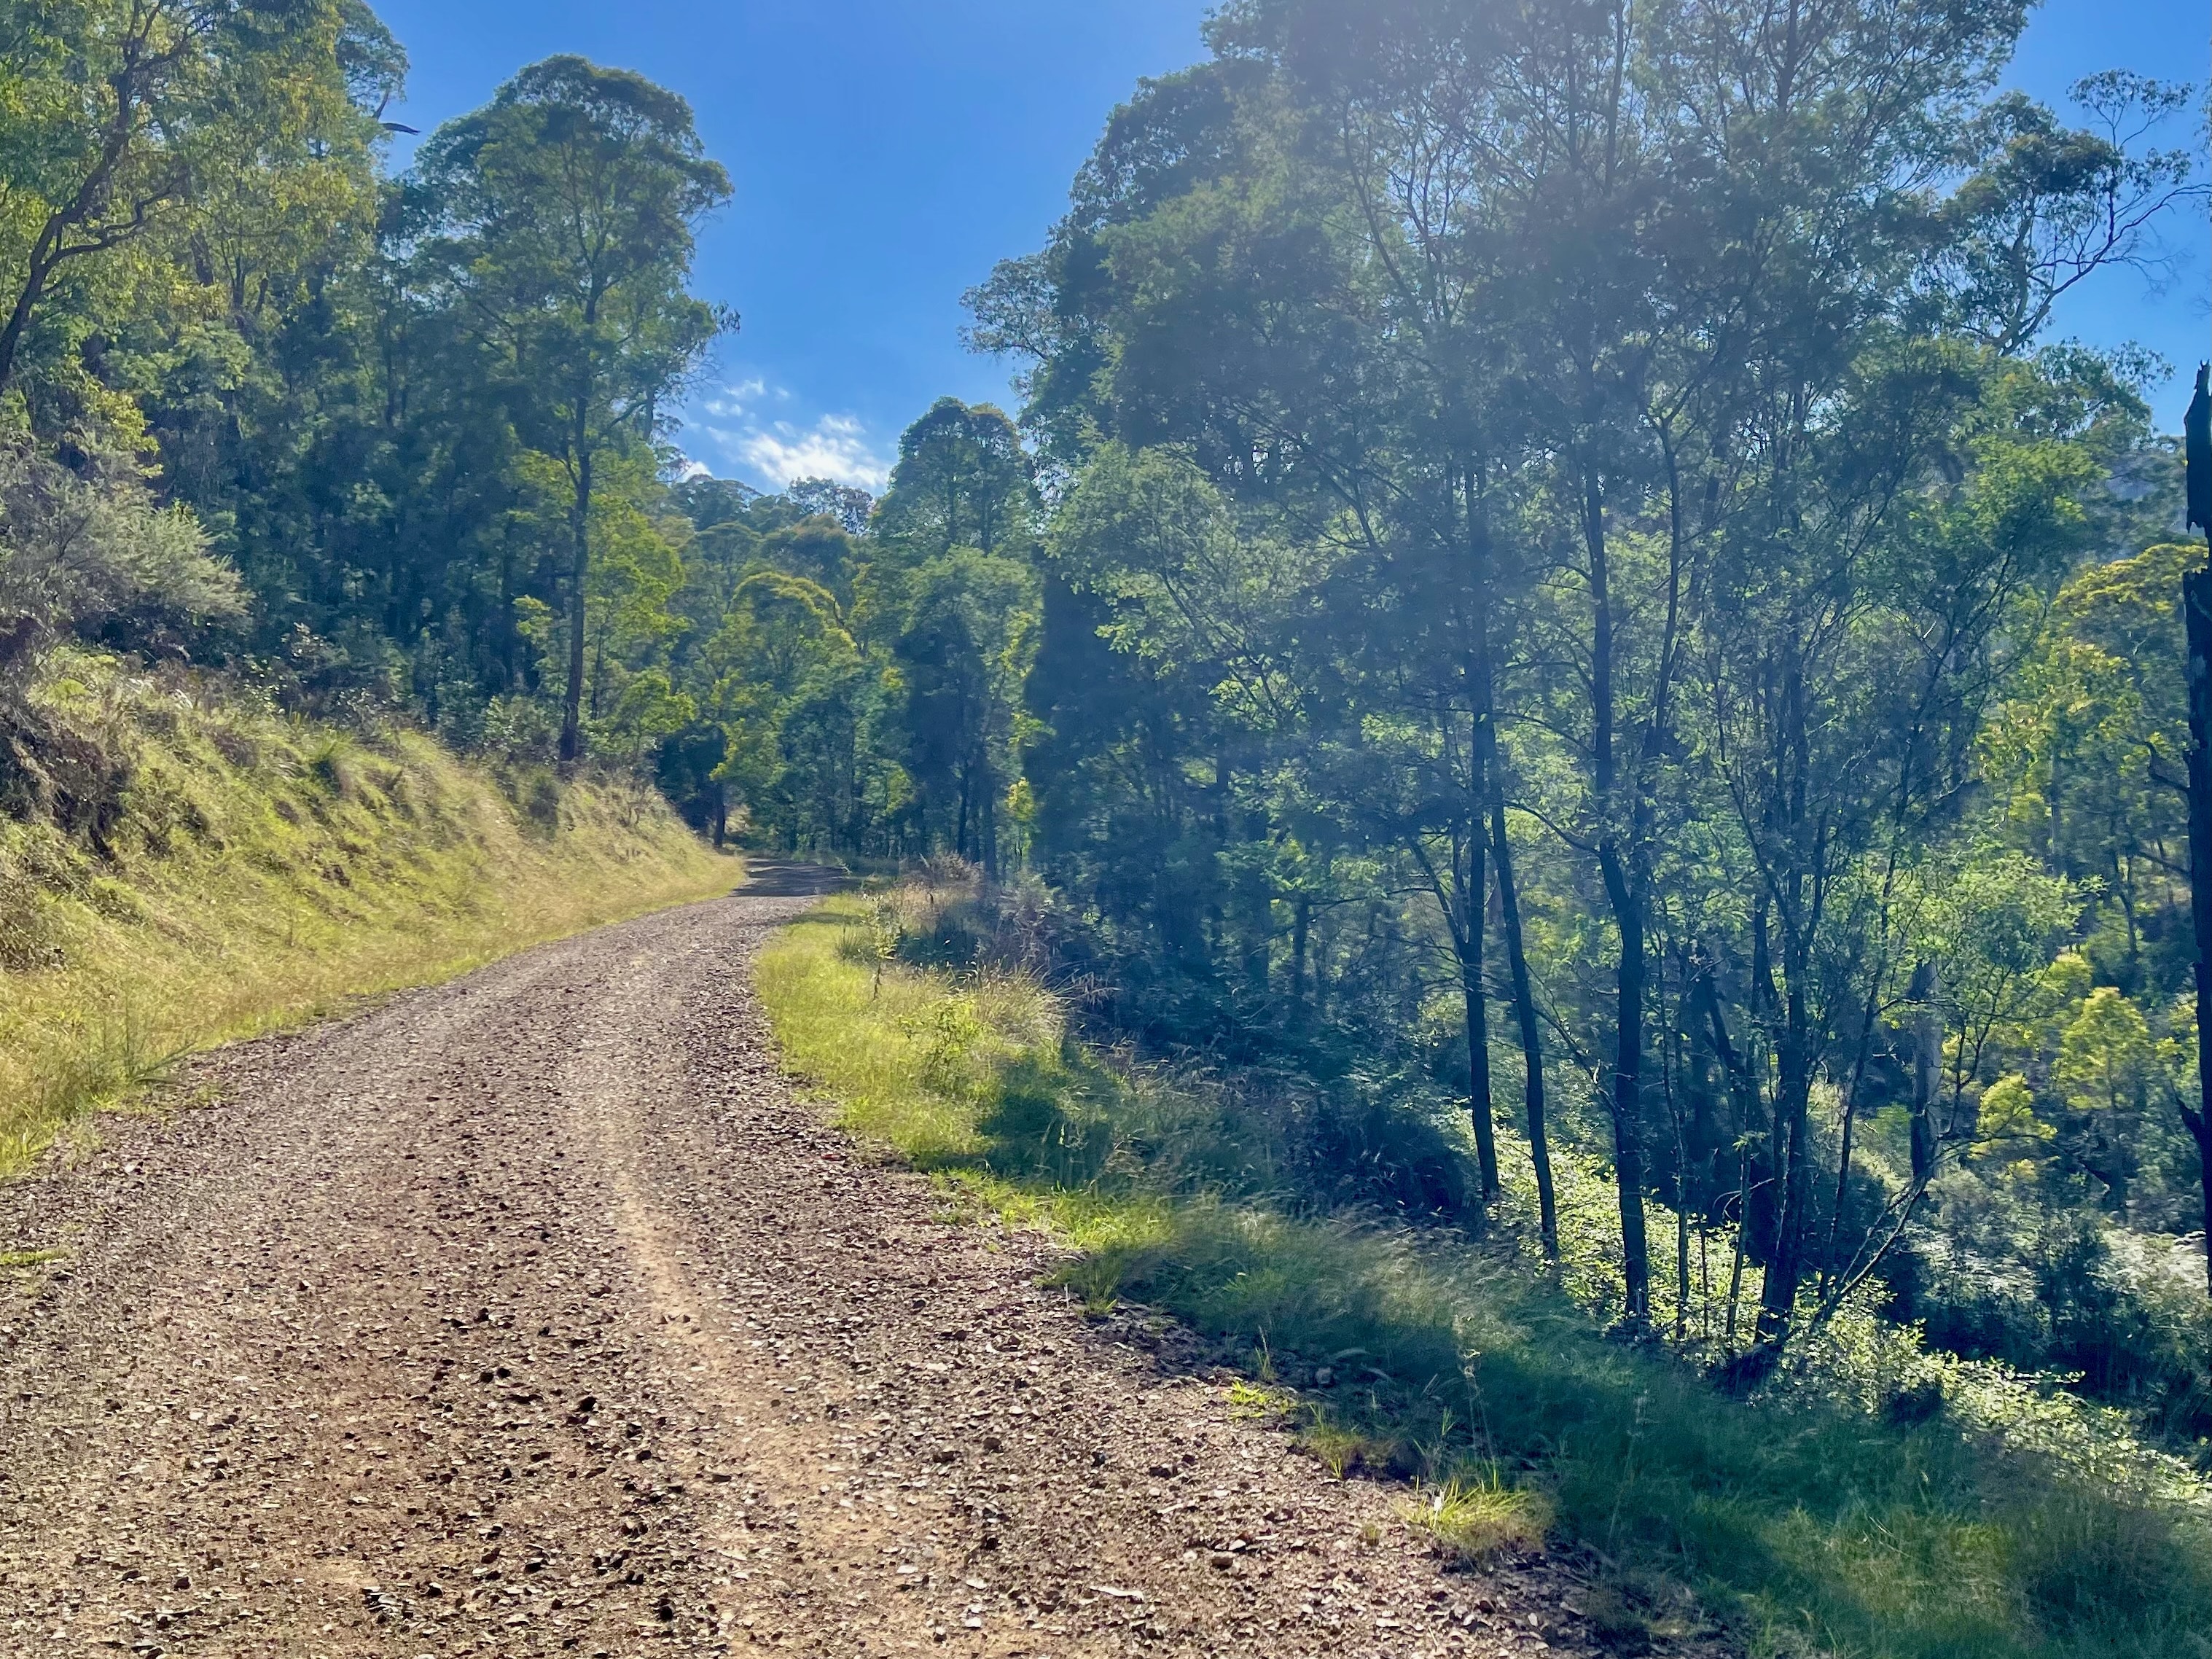 Smooth gravel road winding up through native bushland